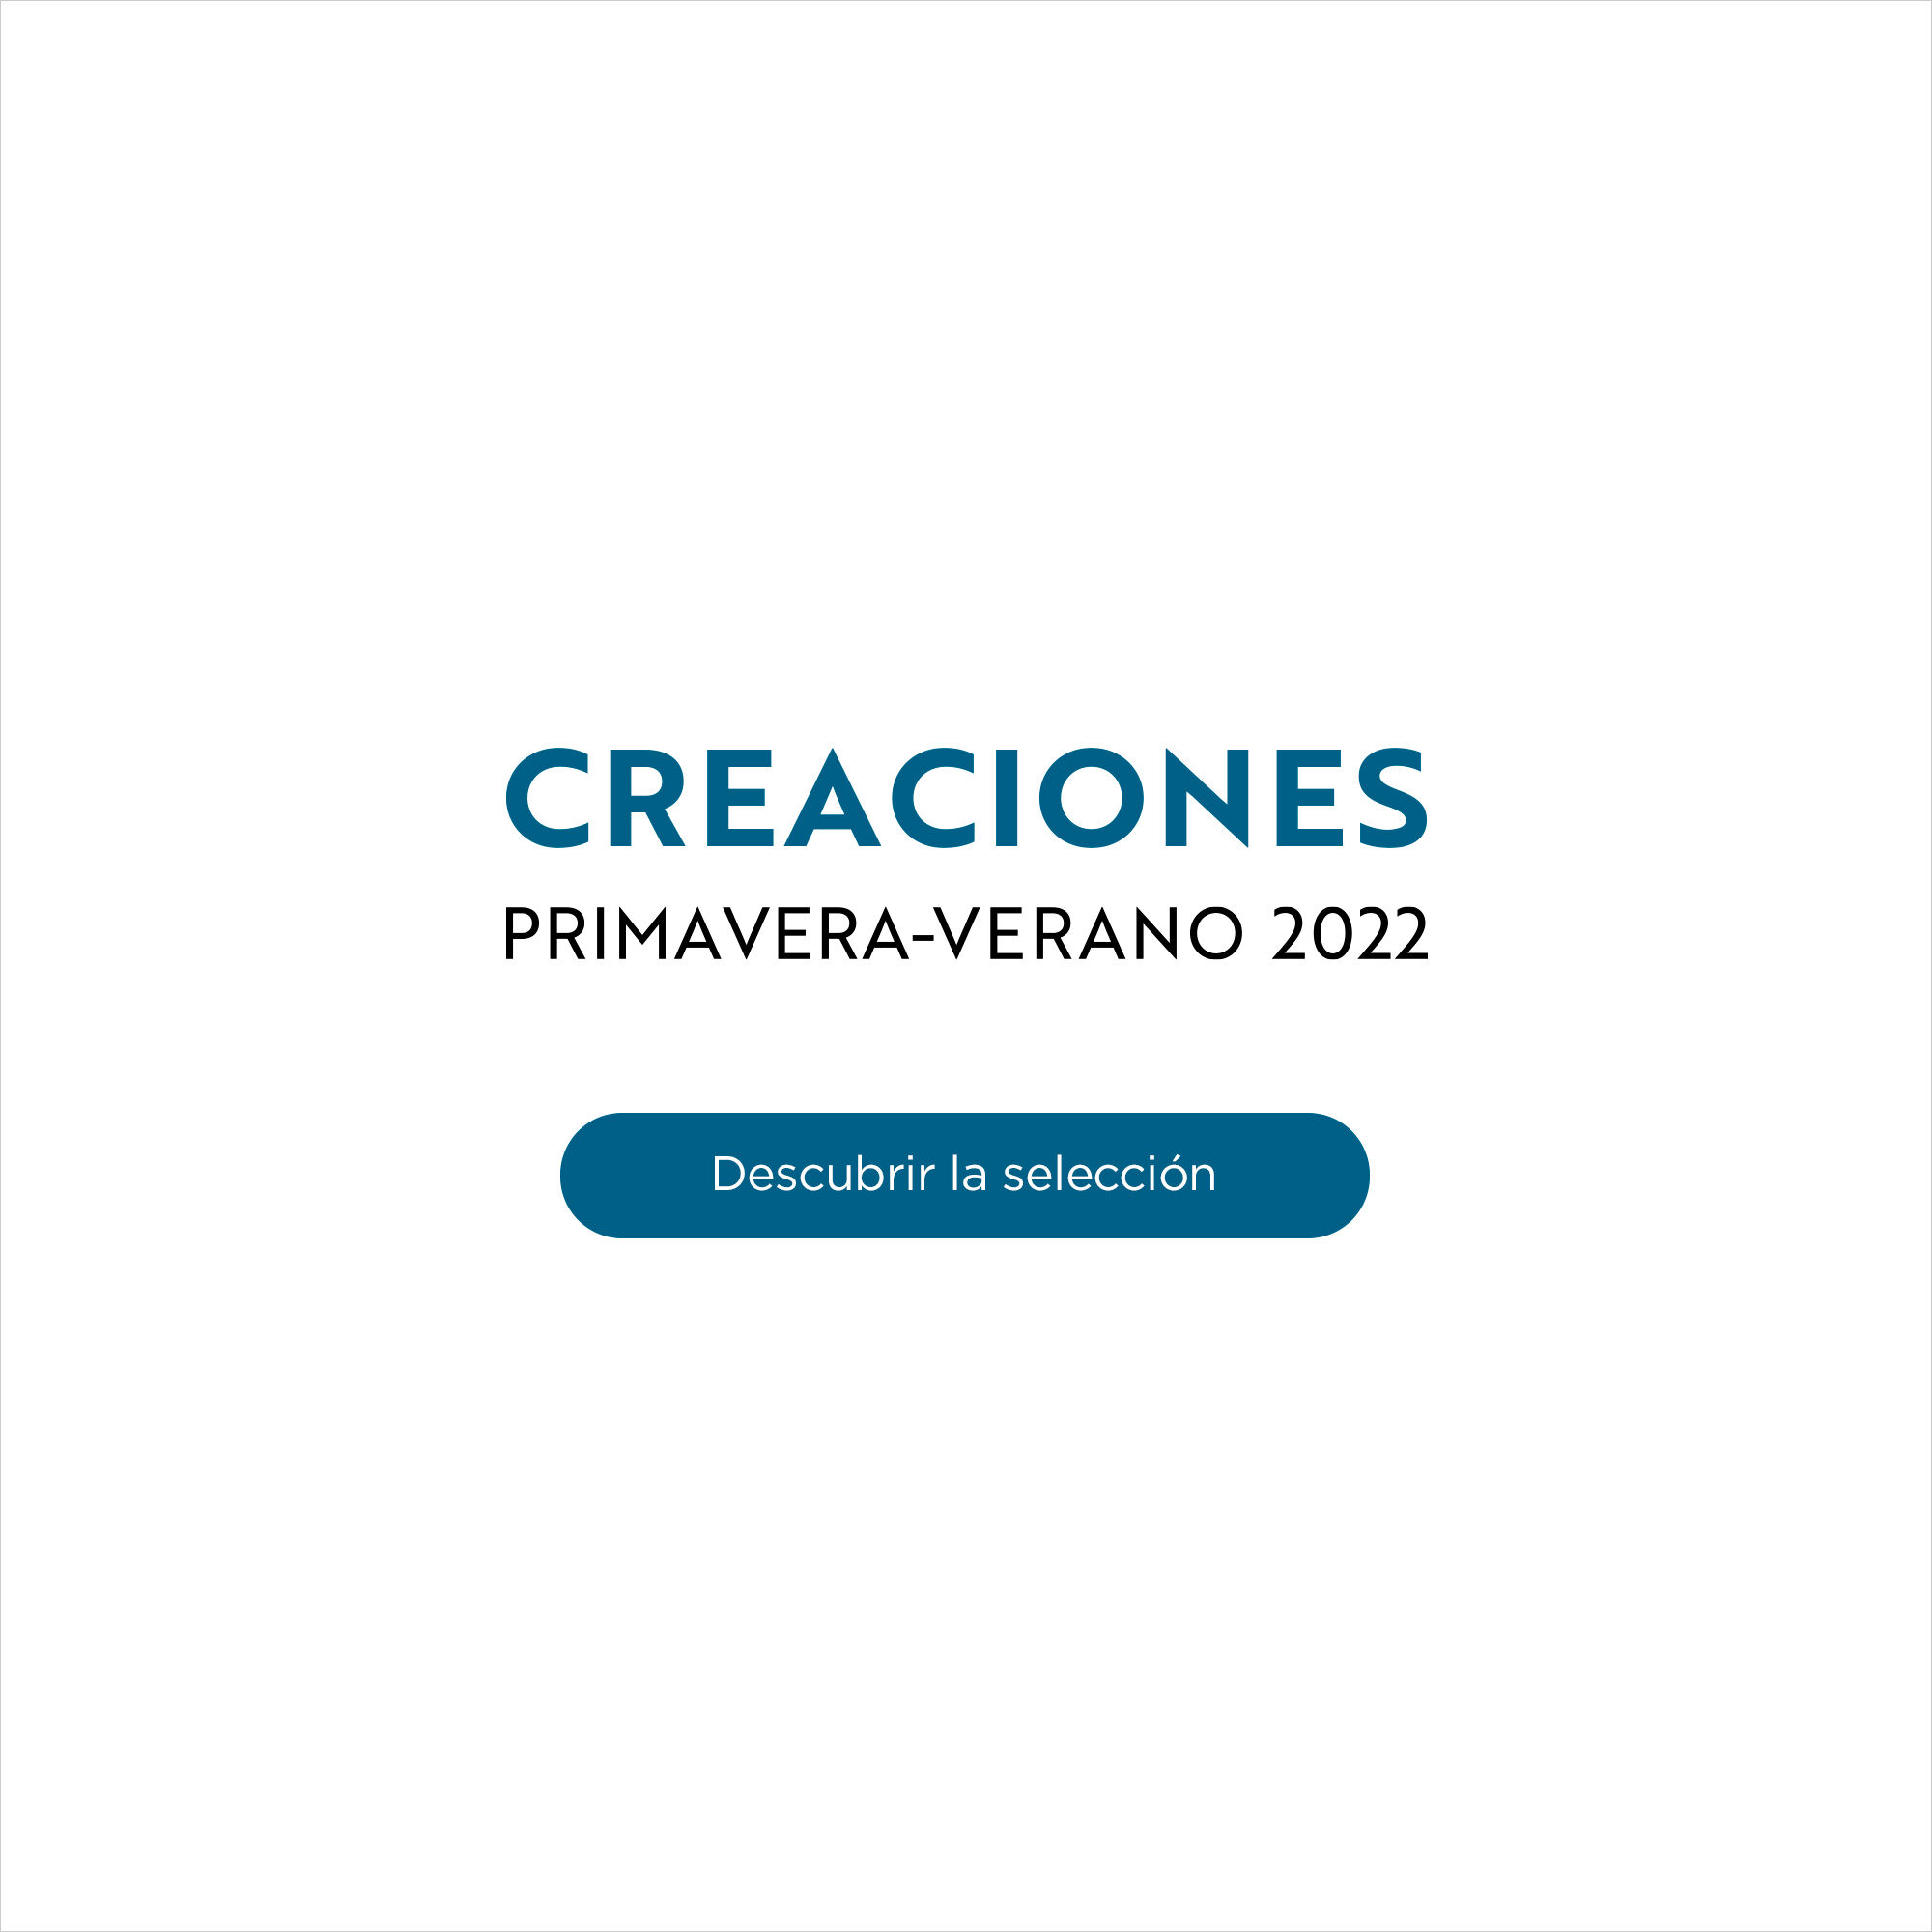 CREACIONES PRIMAVERA-VERANO 2022